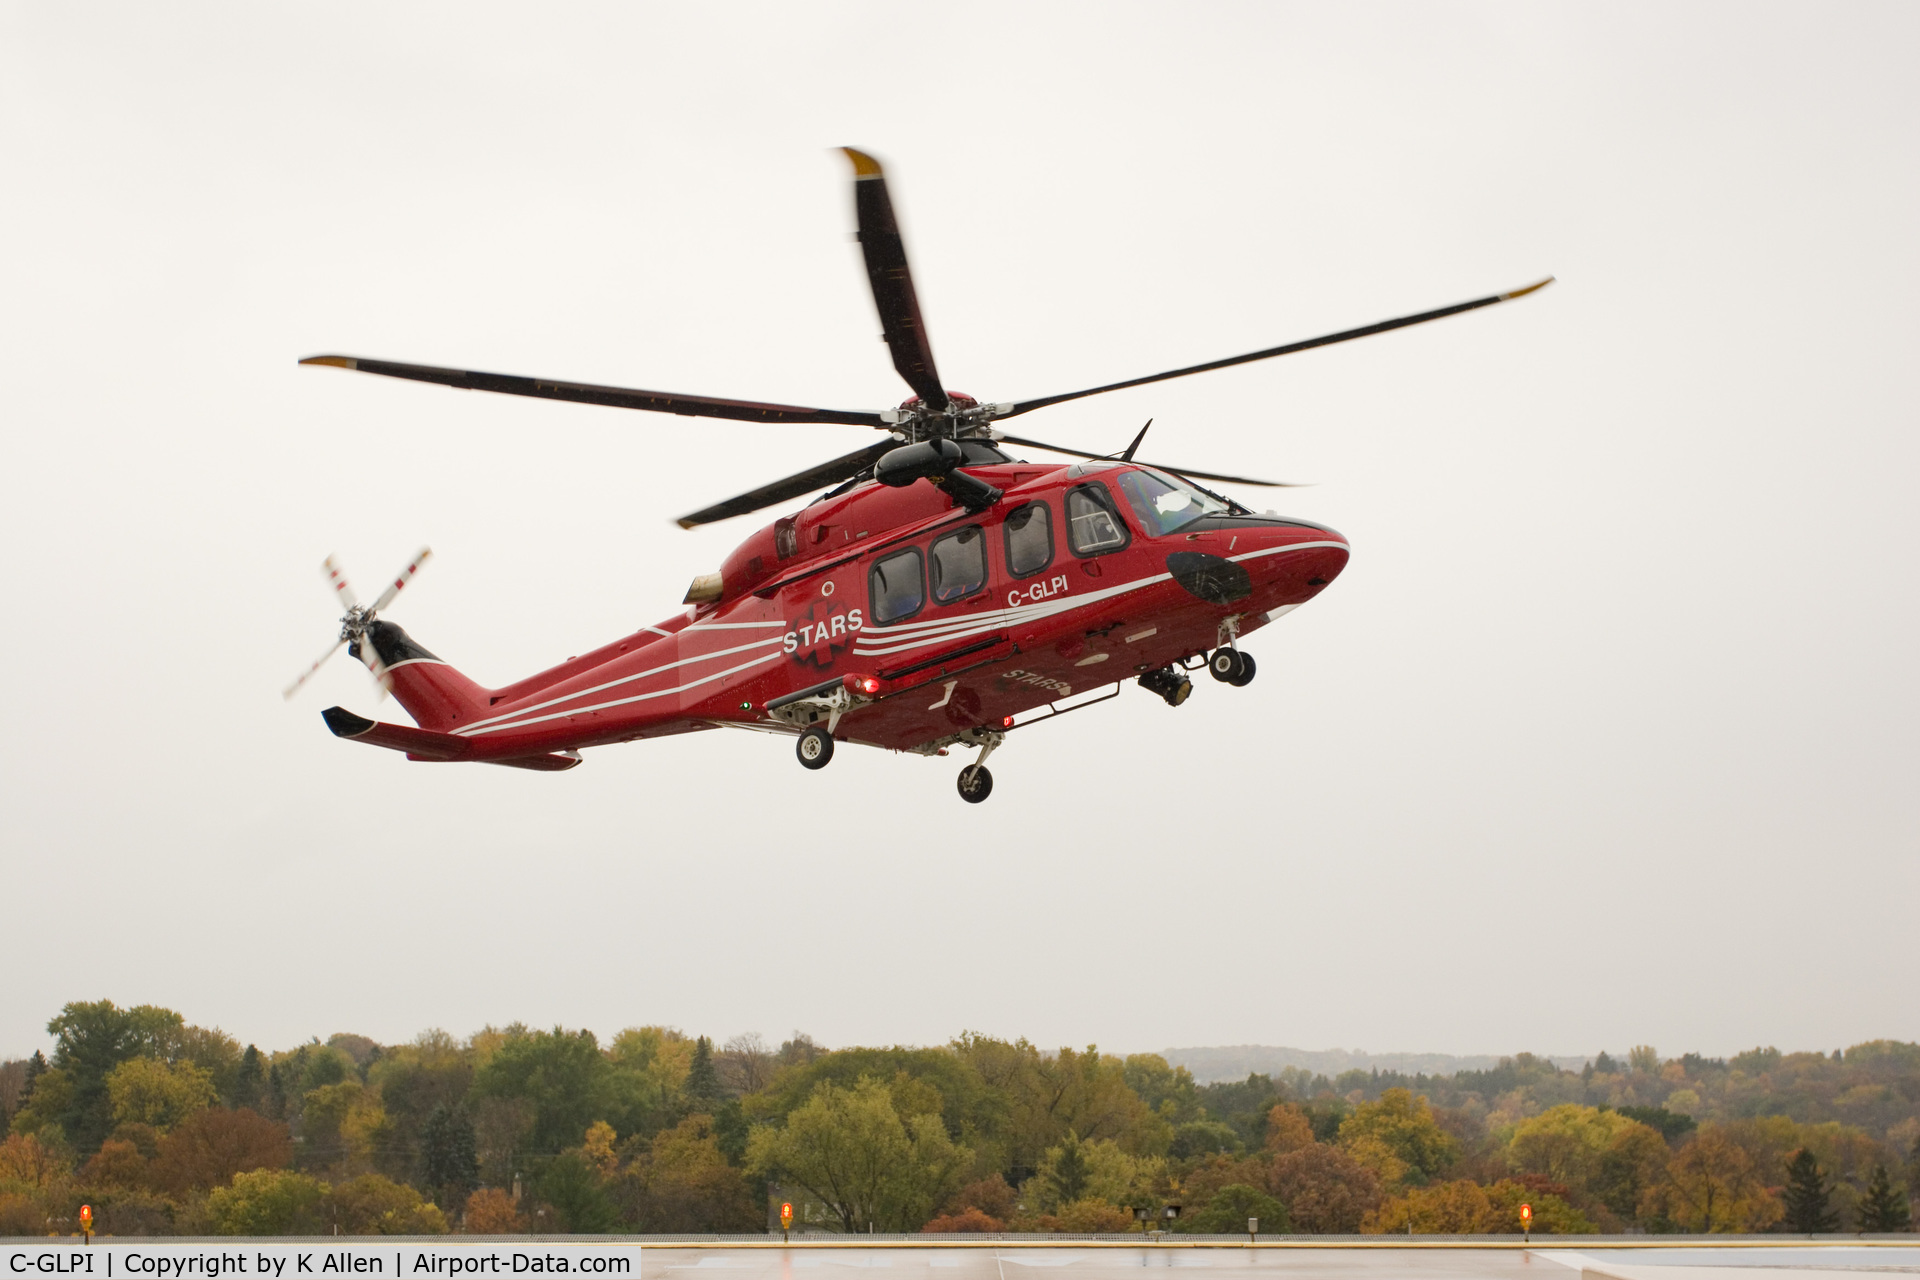 C-GLPI, 2008 AgustaWestland AW-139 C/N 41007, Landing at the Mayo Clinic helipad in Rochester, MN